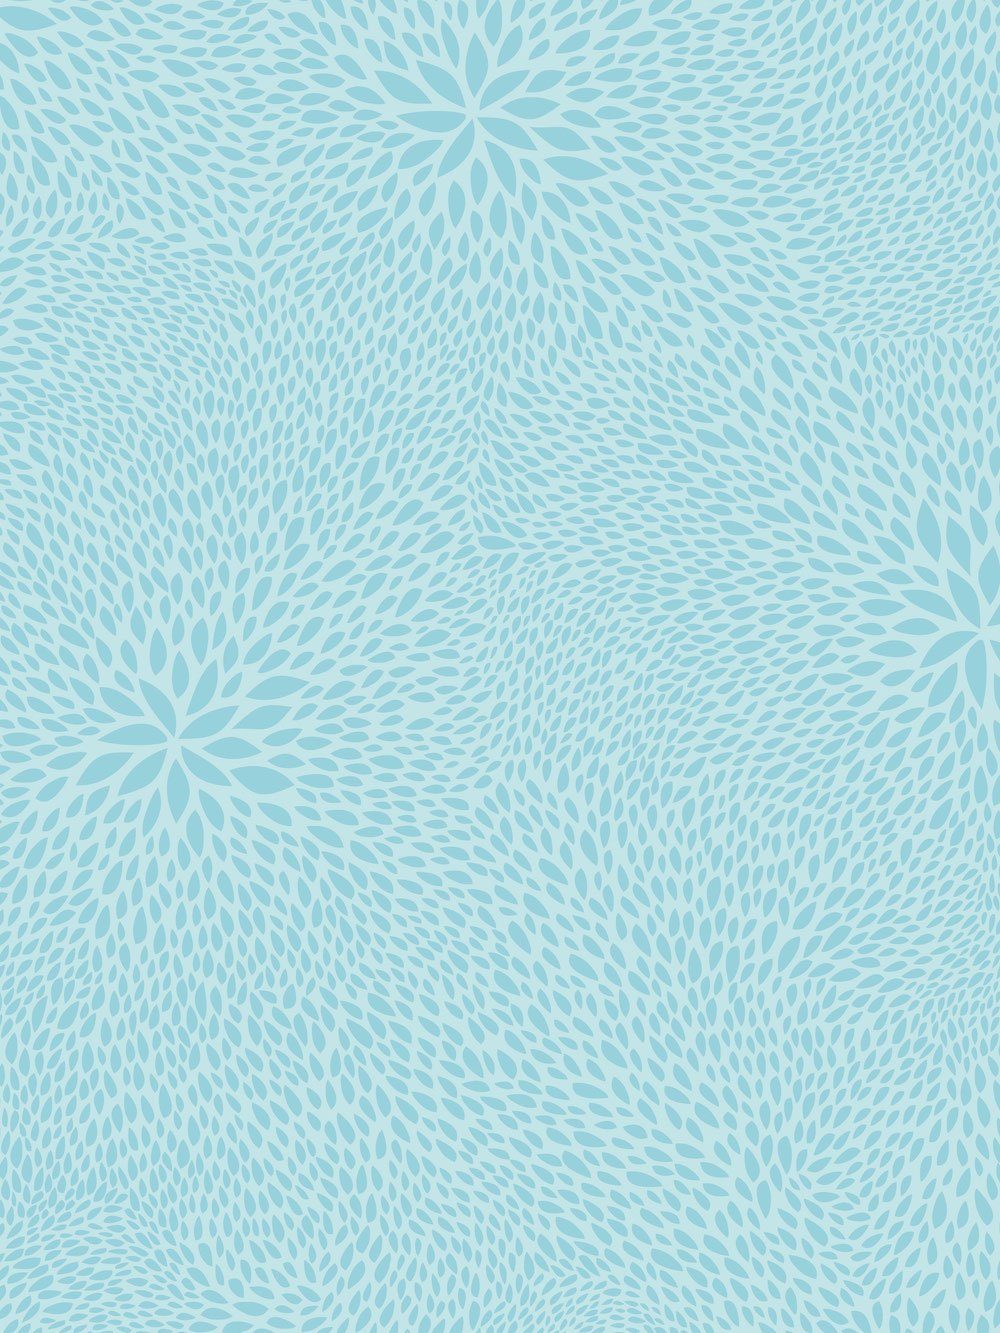 H-Erzmade Zeichenpapier Décopatch-Papier 701 Muster Blütenblätter hellblau